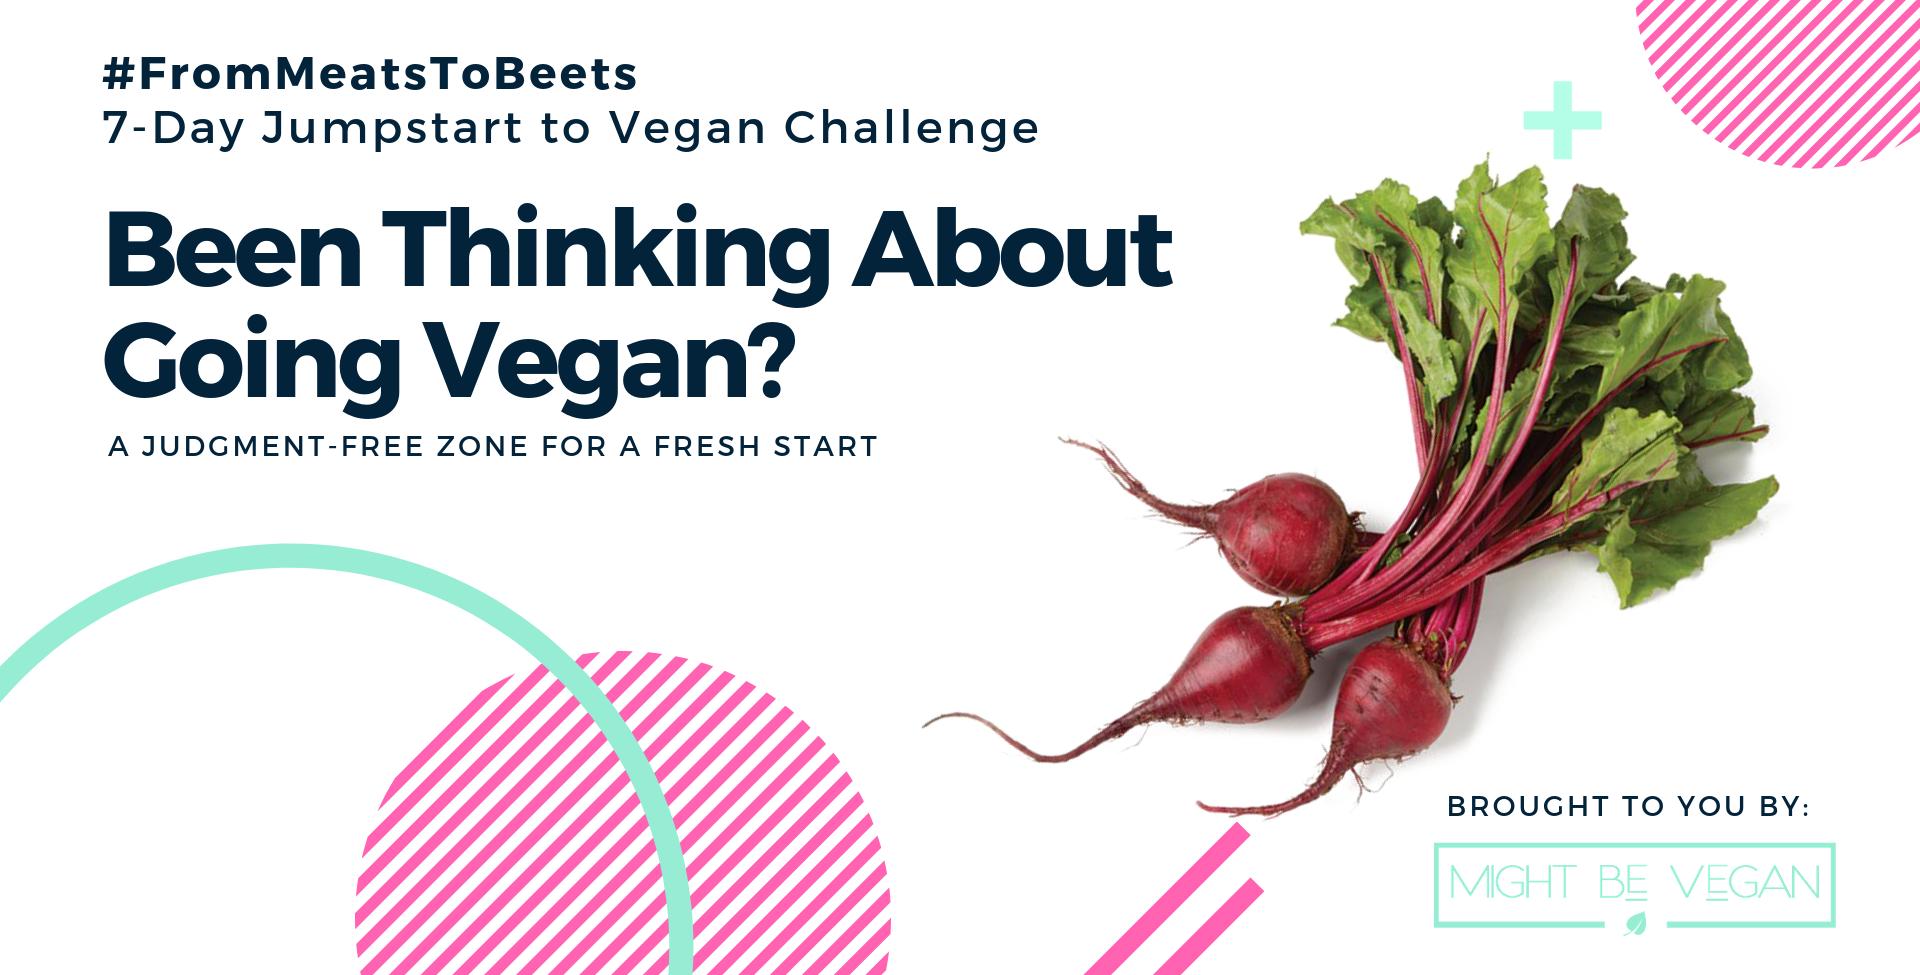 7-Day Jumpstart to Vegan Challenge | Danville, VA